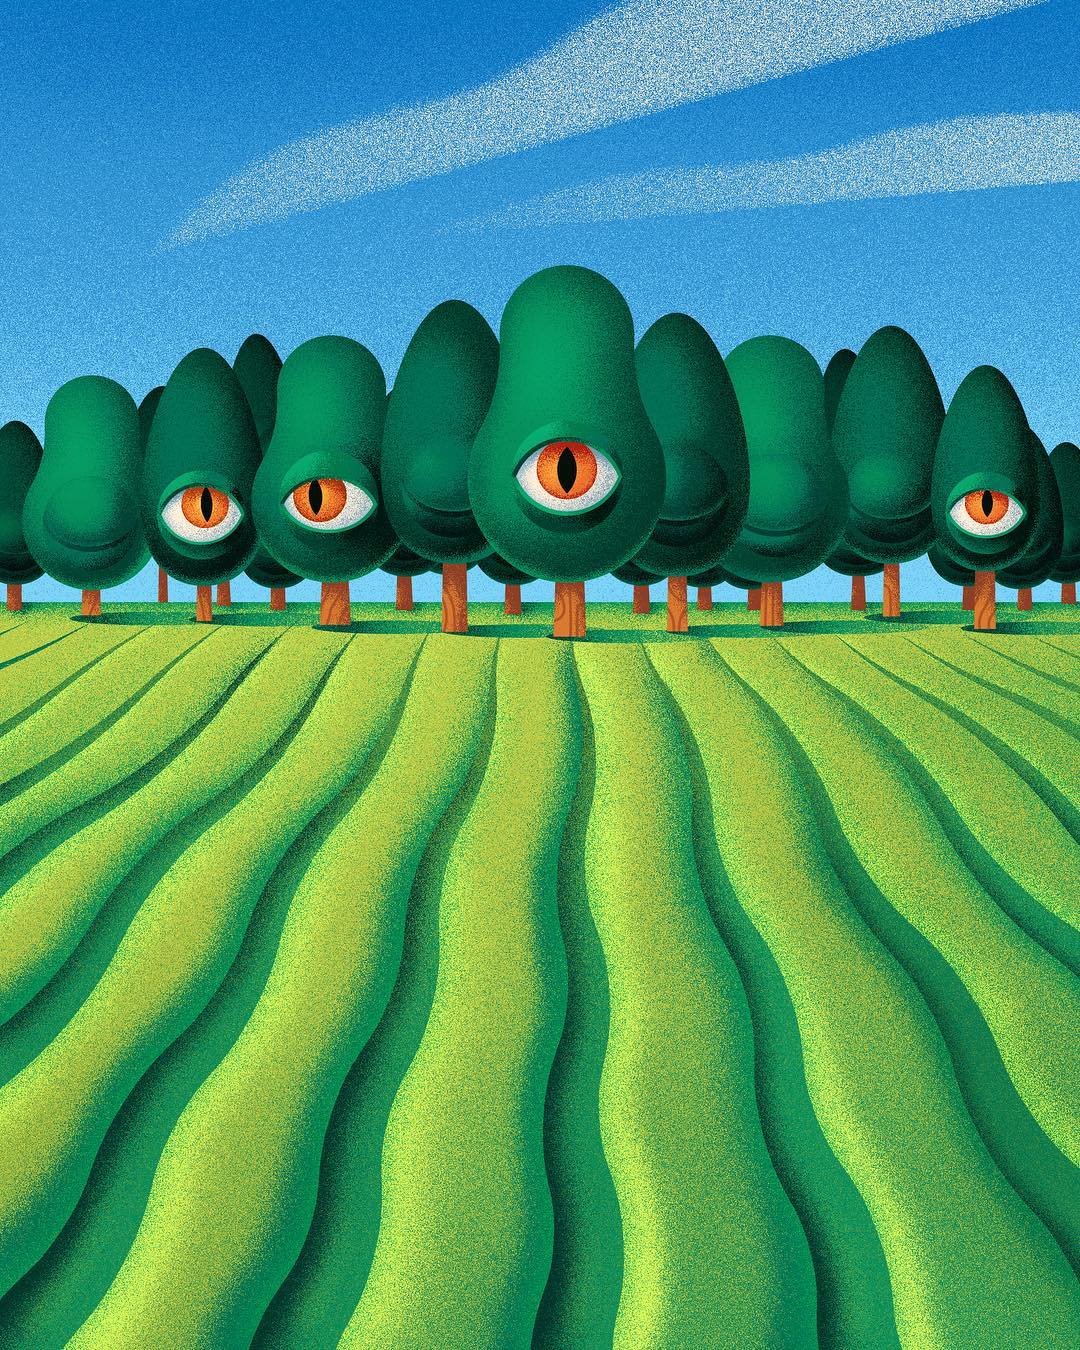 Marvelous Surrealistic Illustrations Of Eyes Peering From Plants And Animals By Ana Miminoshvili (1)